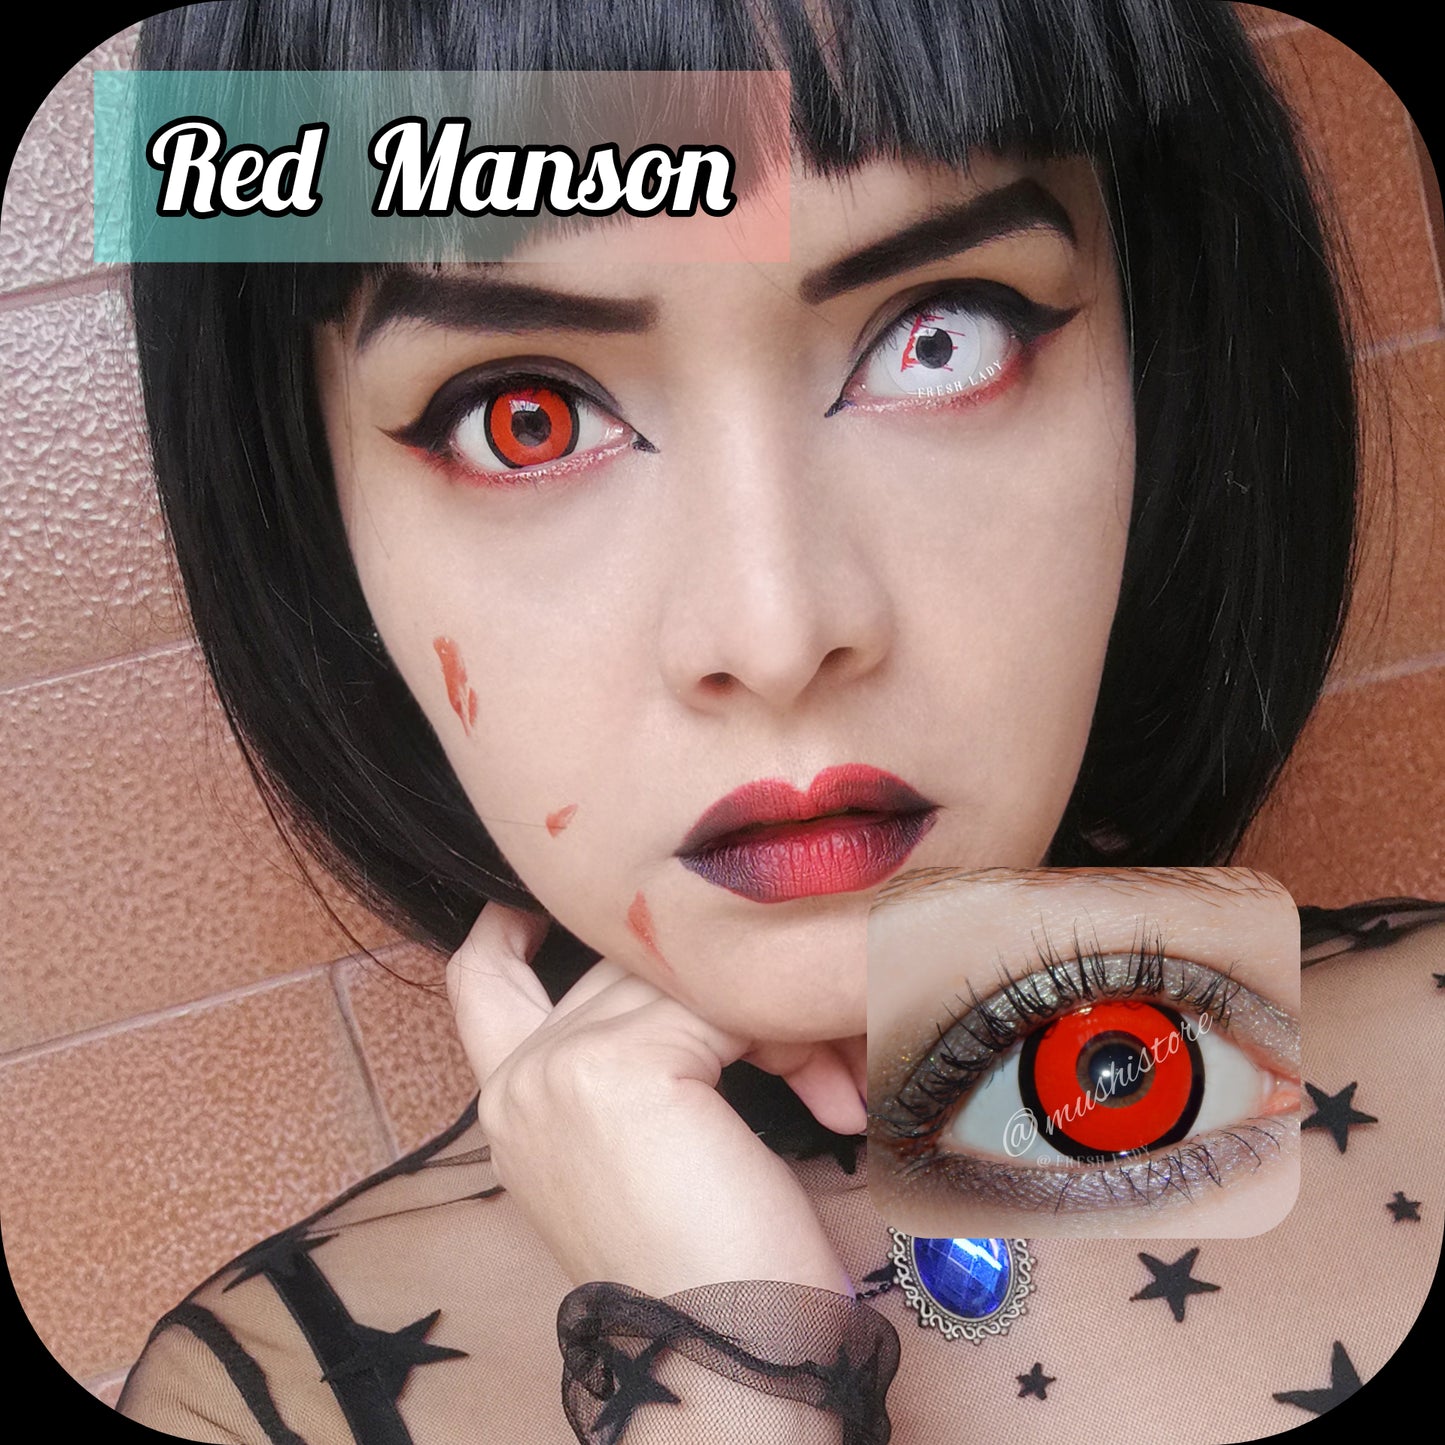 Red Manson